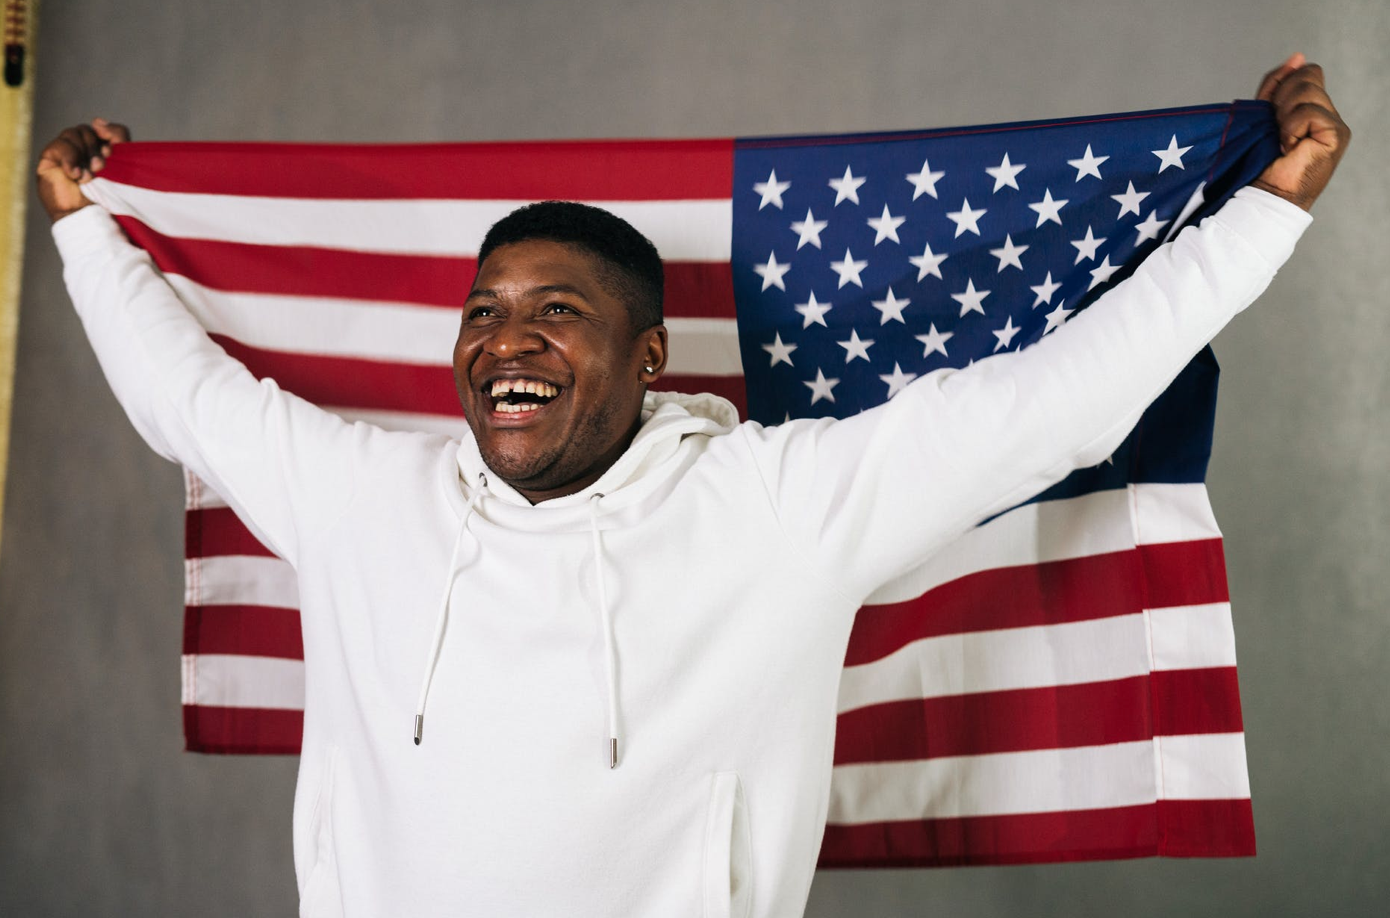 Smiling man in white hoodie holding American flag; image by Tima Miroshnichenko, via Unsplash.com.